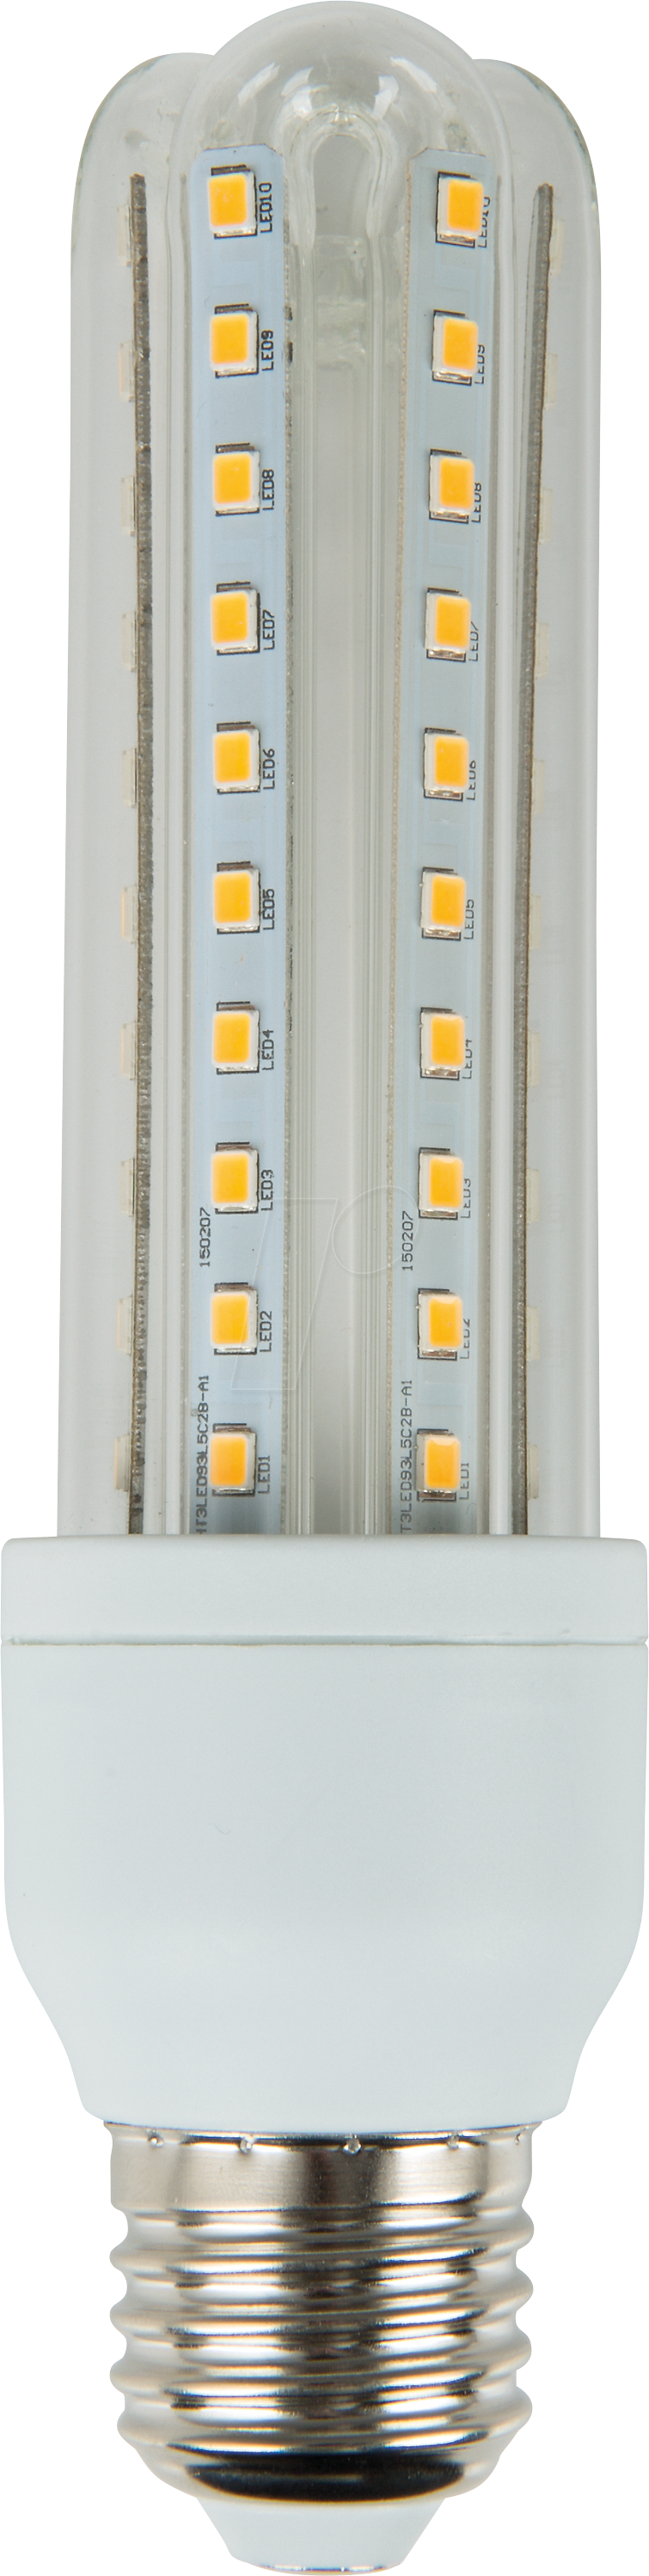 Image of HEIT 16050 - LED-Lampe E27, 12 W, 960 lm, 3000 K, 3U